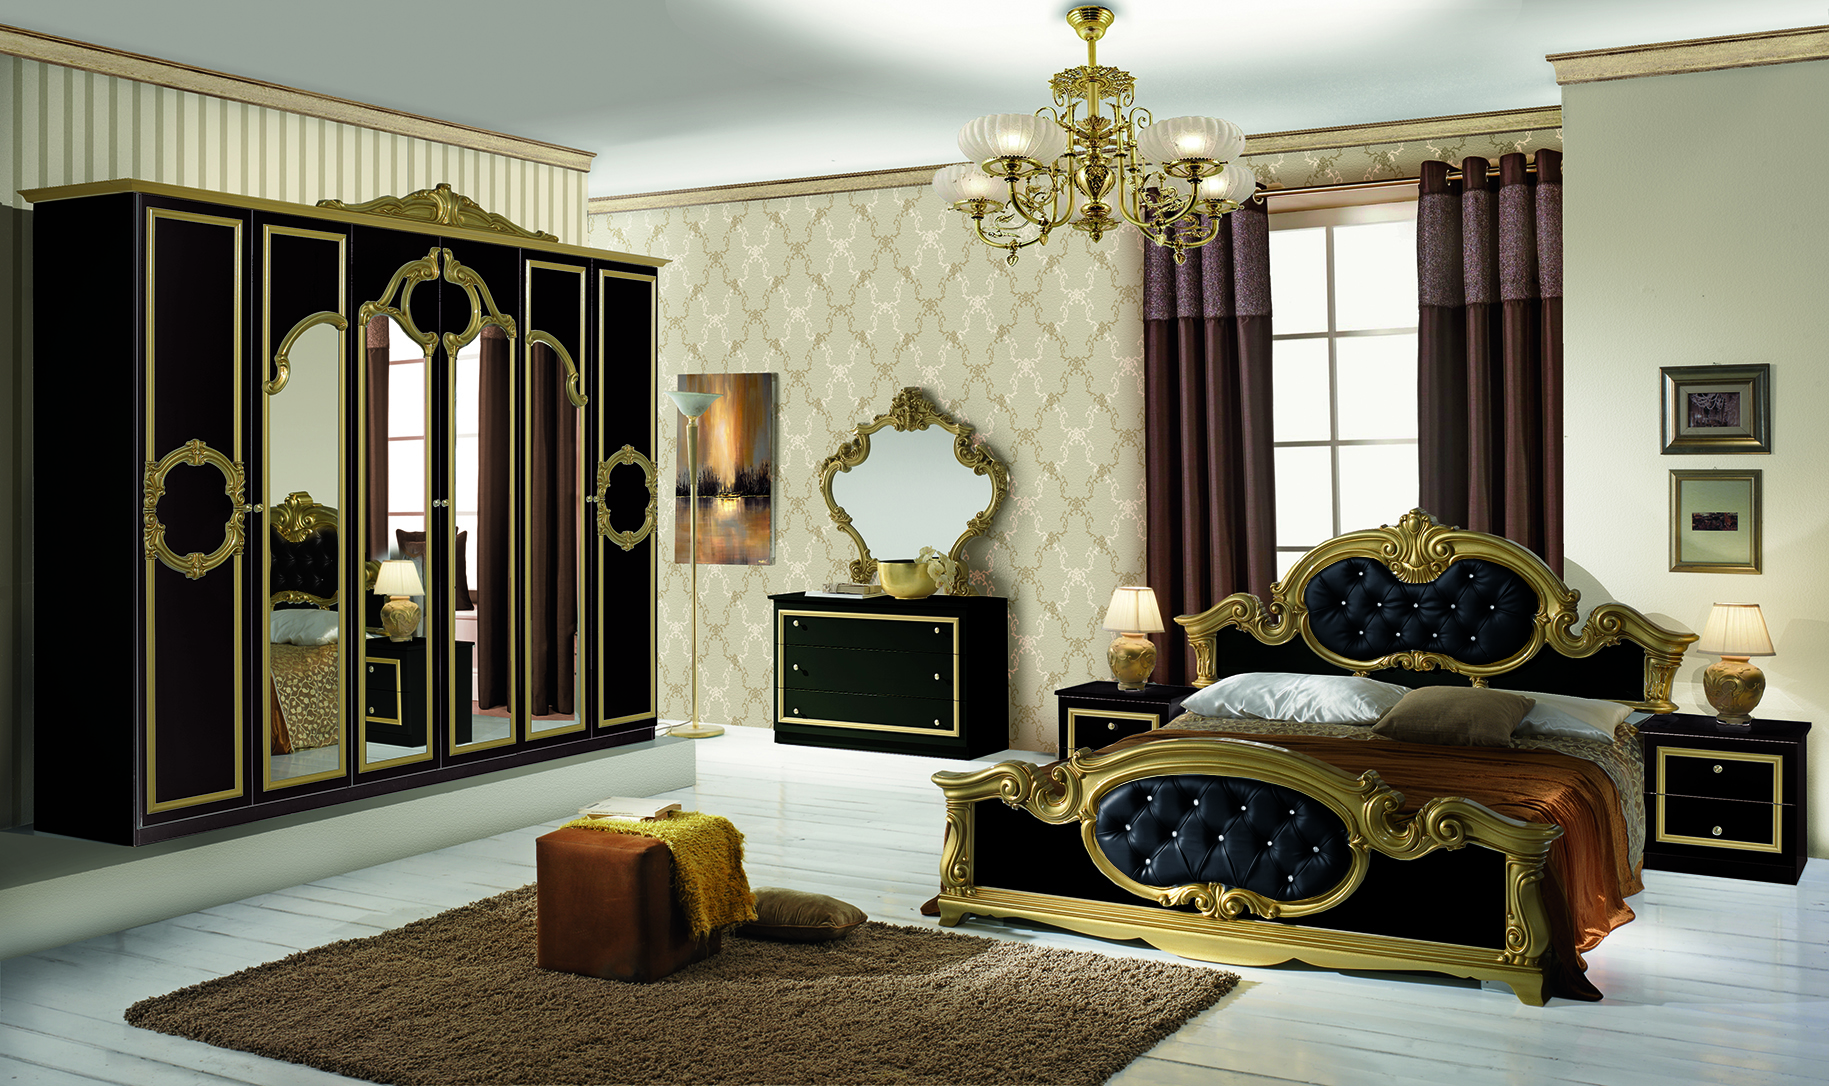 Barock Schlafzimmer Barokko in Schwarz-Gold